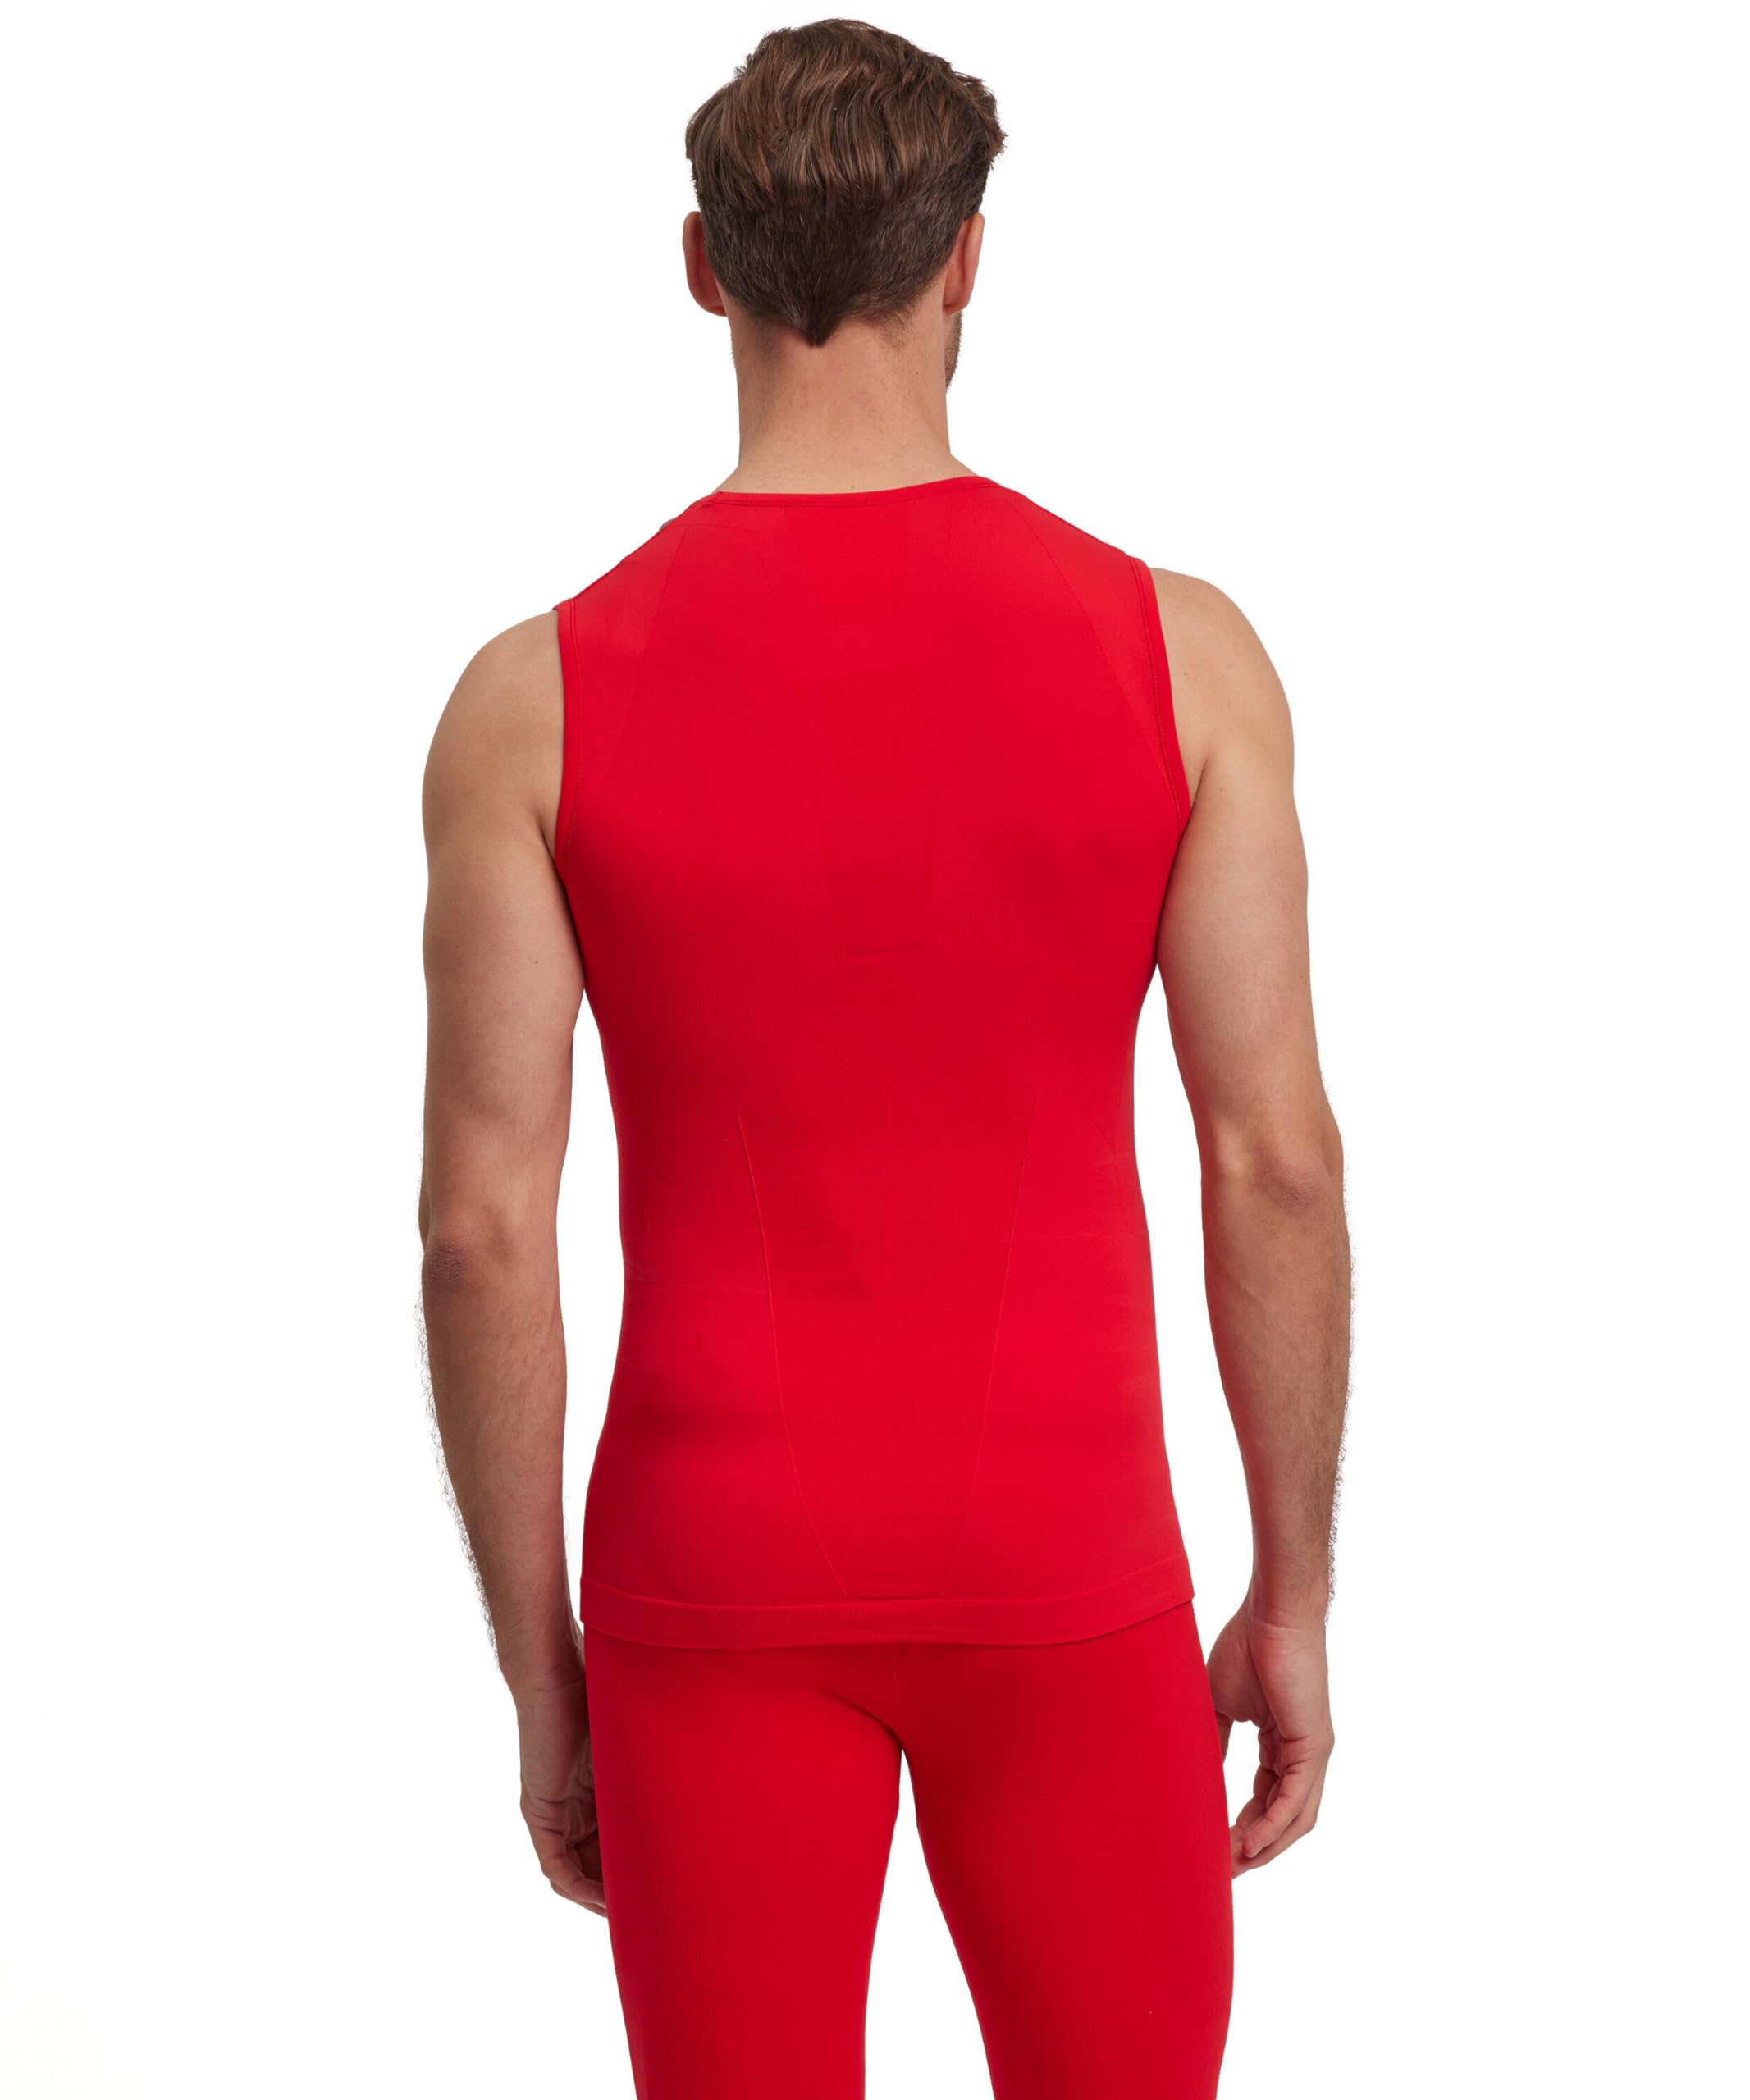 FALKE Herren Baselayer-Shirt Warm M S/L SH Funktionsgarn Schnelltrocknend 1 Stück, Rot (Scarlet 8070), XL